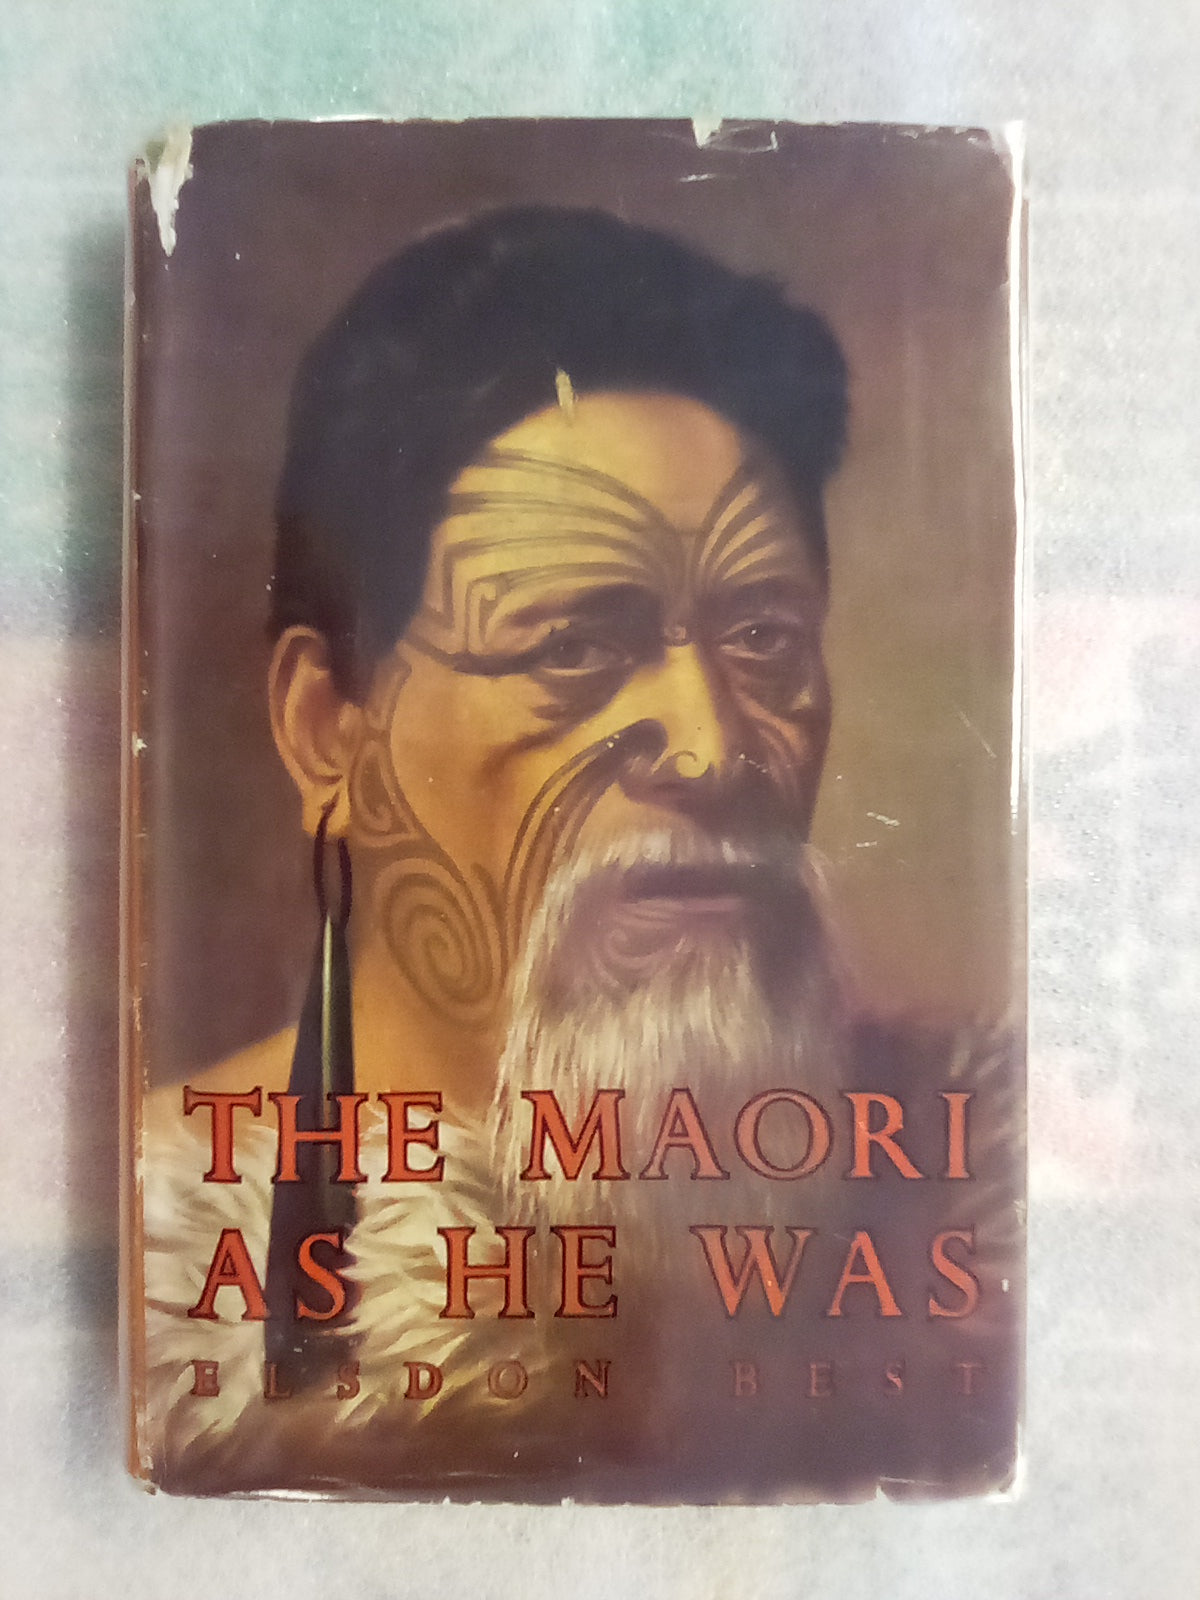 The Māori as He Was (1952) by Elsdon Best